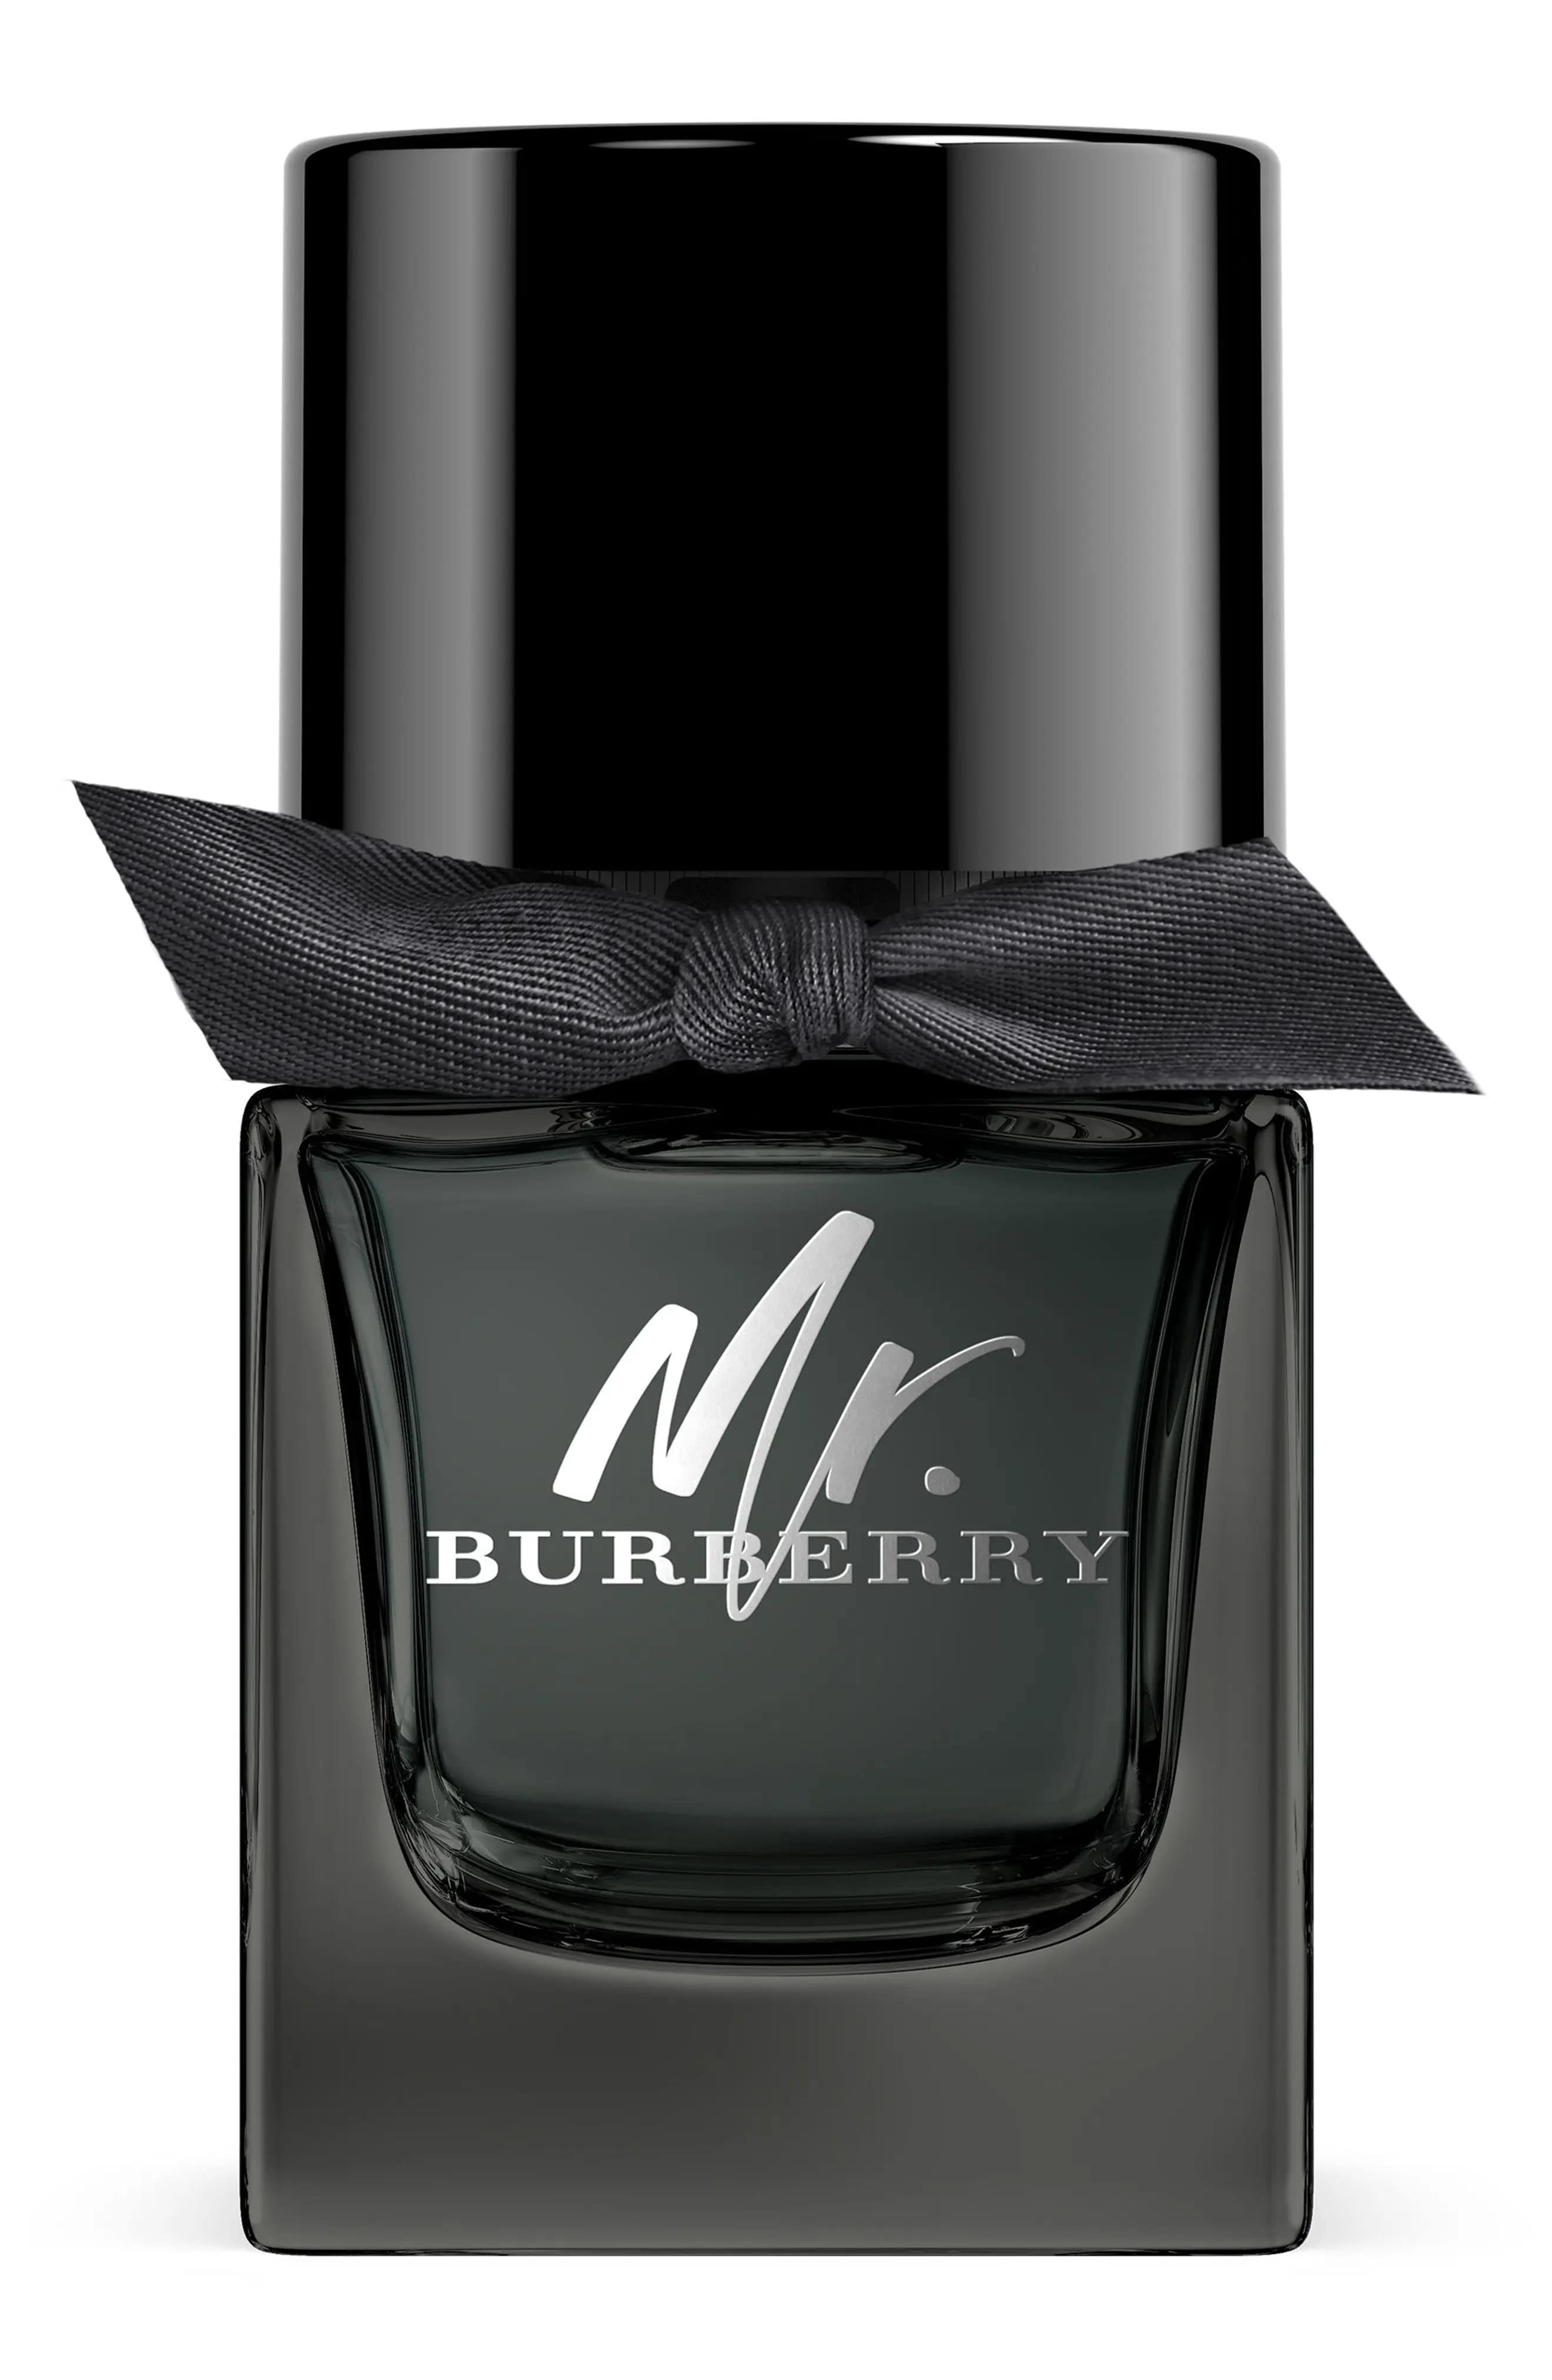 Mr. Burberry EDP Spray Perfume for Men by Burberry